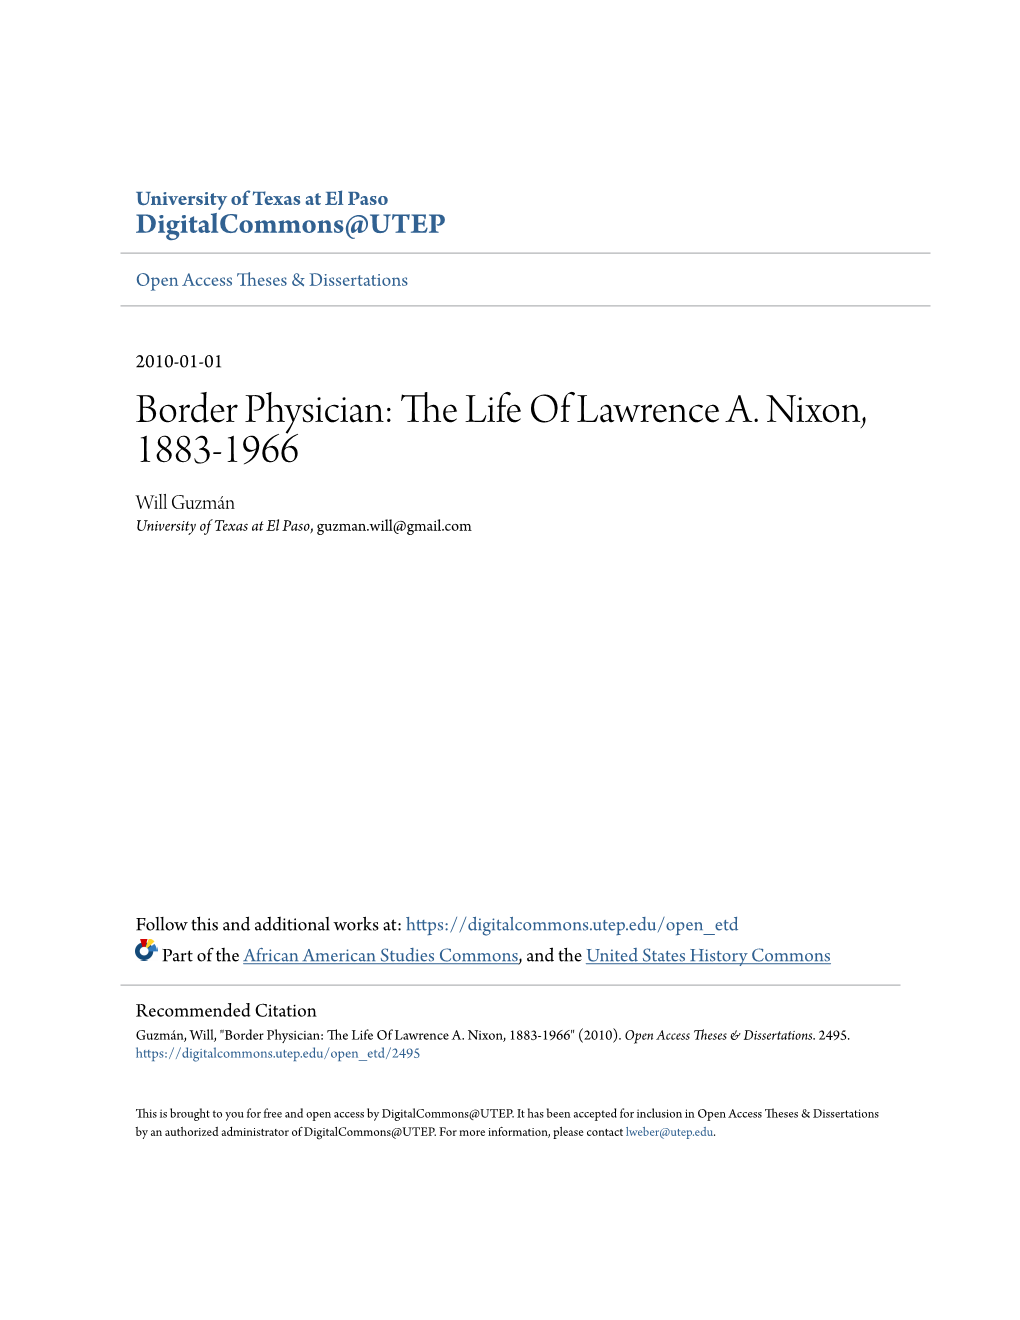 Border Physician: the Life of Lawrence A. Nixon, 1883-1966 Will Guzmán University of Texas at El Paso, Guzman.Will@Gmail.Com